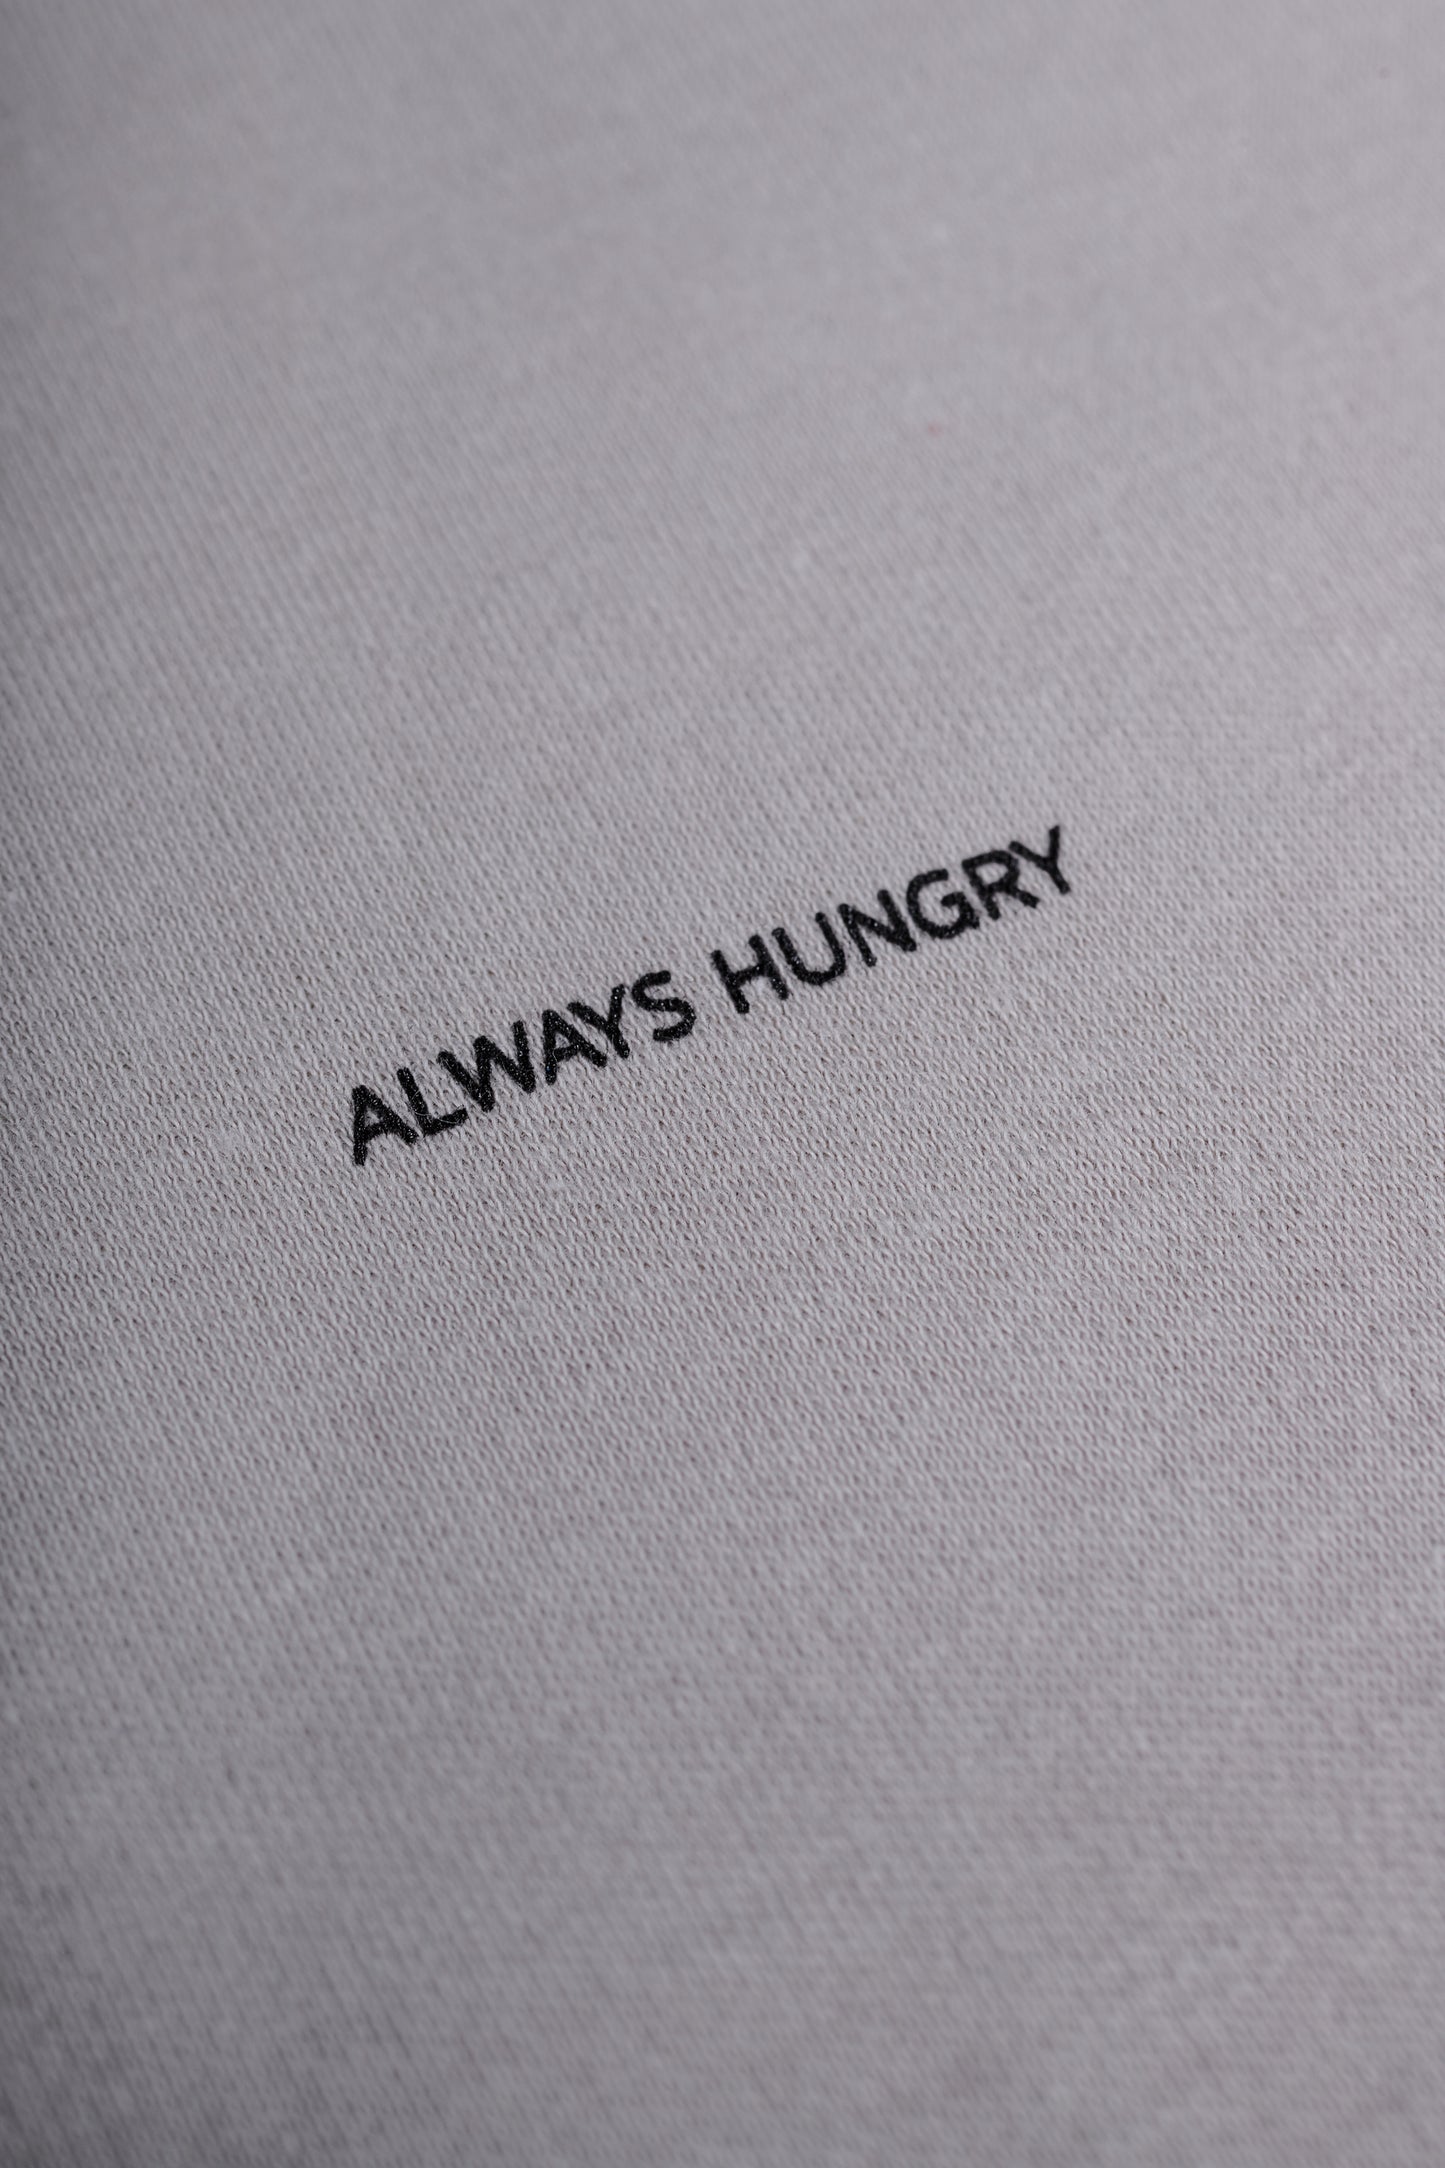 Women's "Always Hungry"